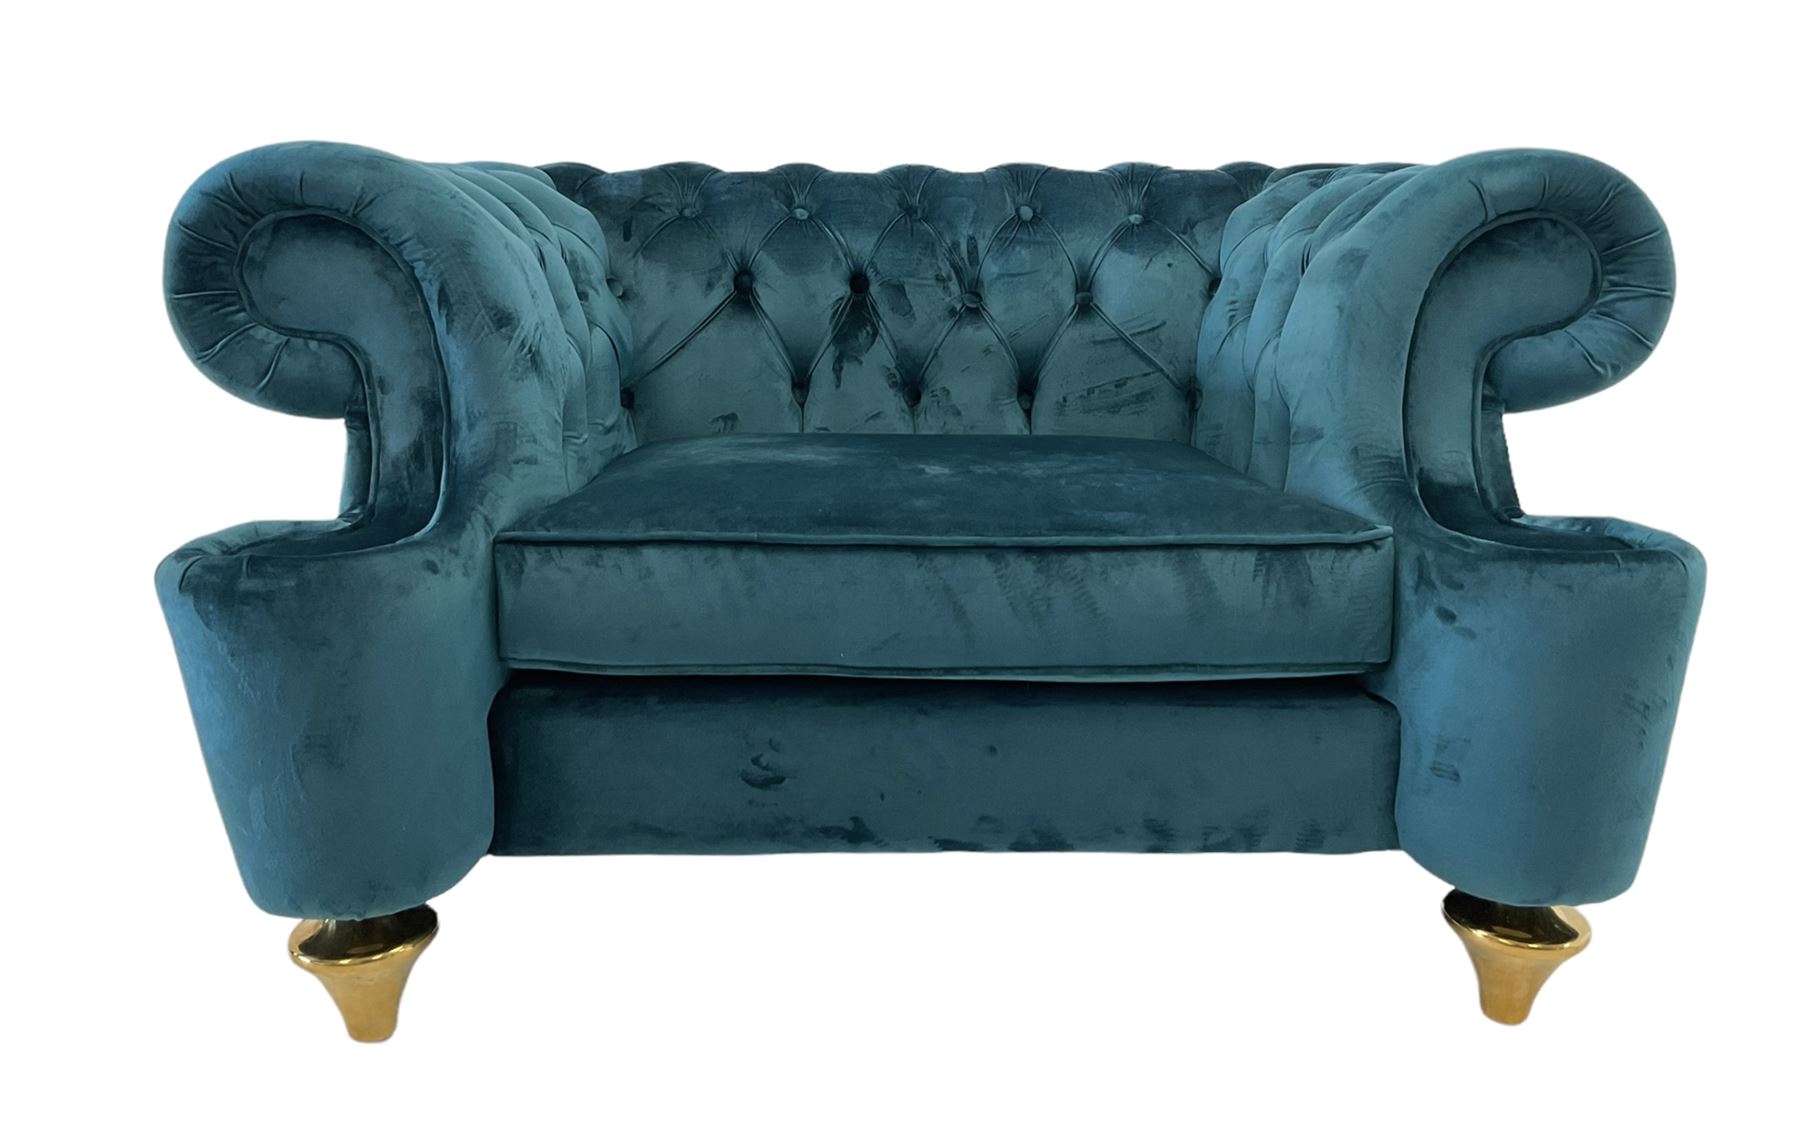 Chesterfield style armchair